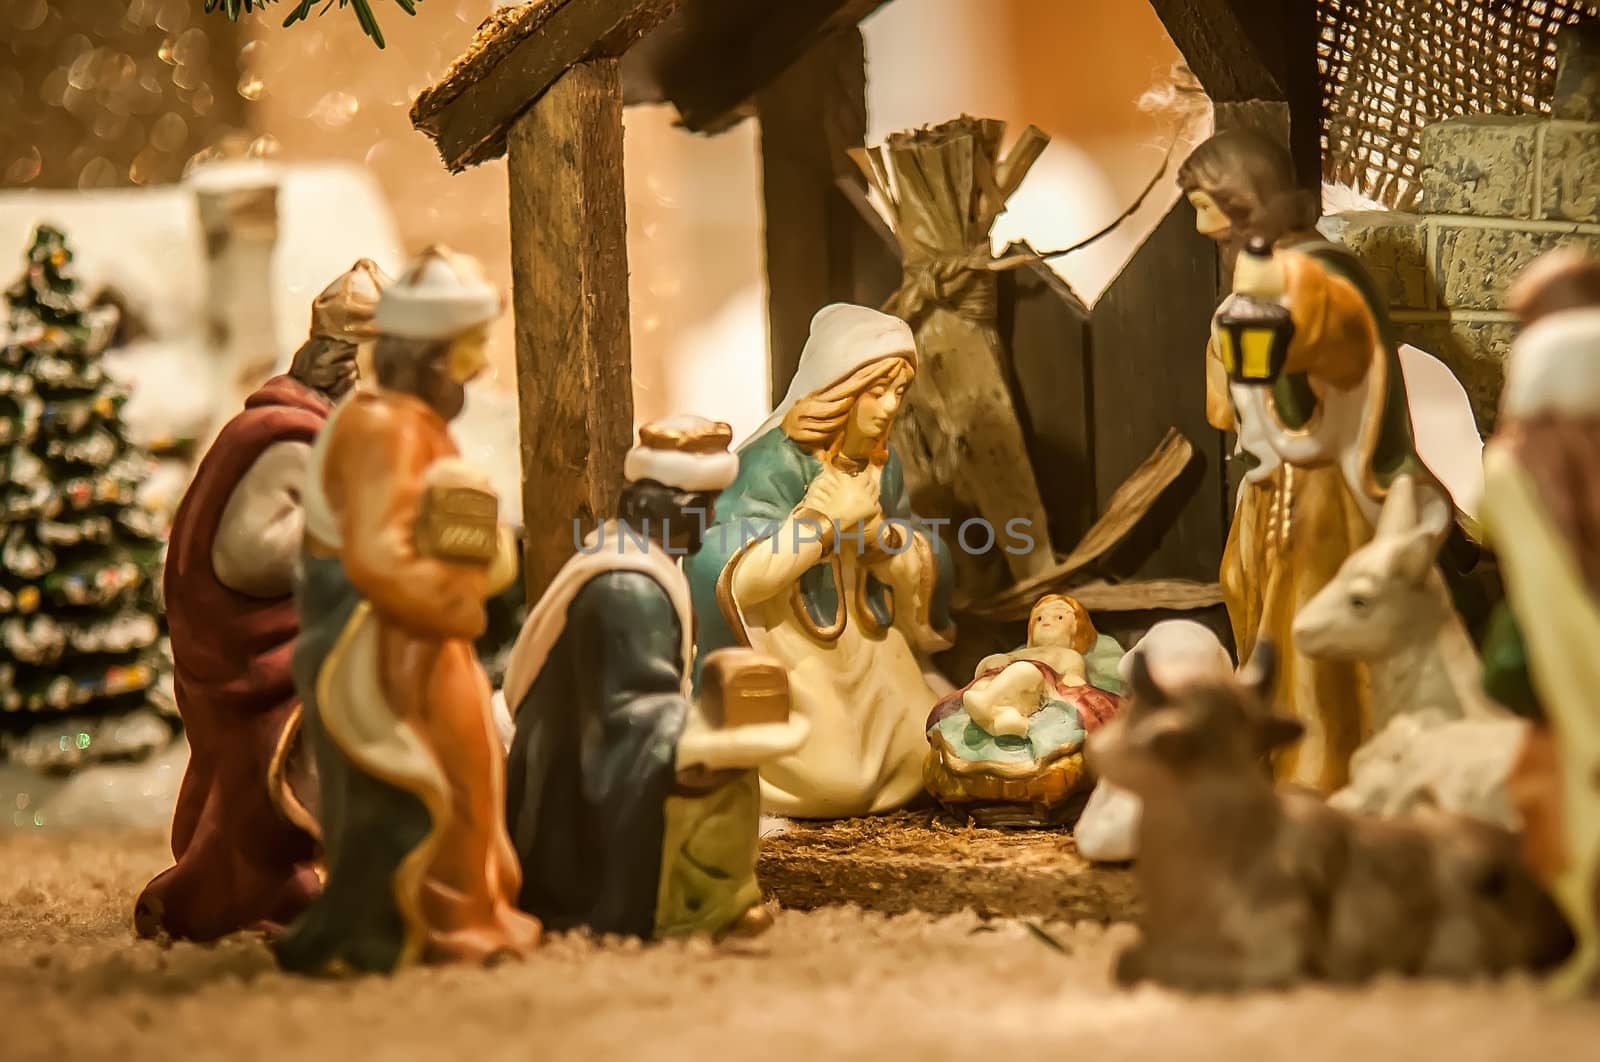 Nativity Set by digidreamgrafix